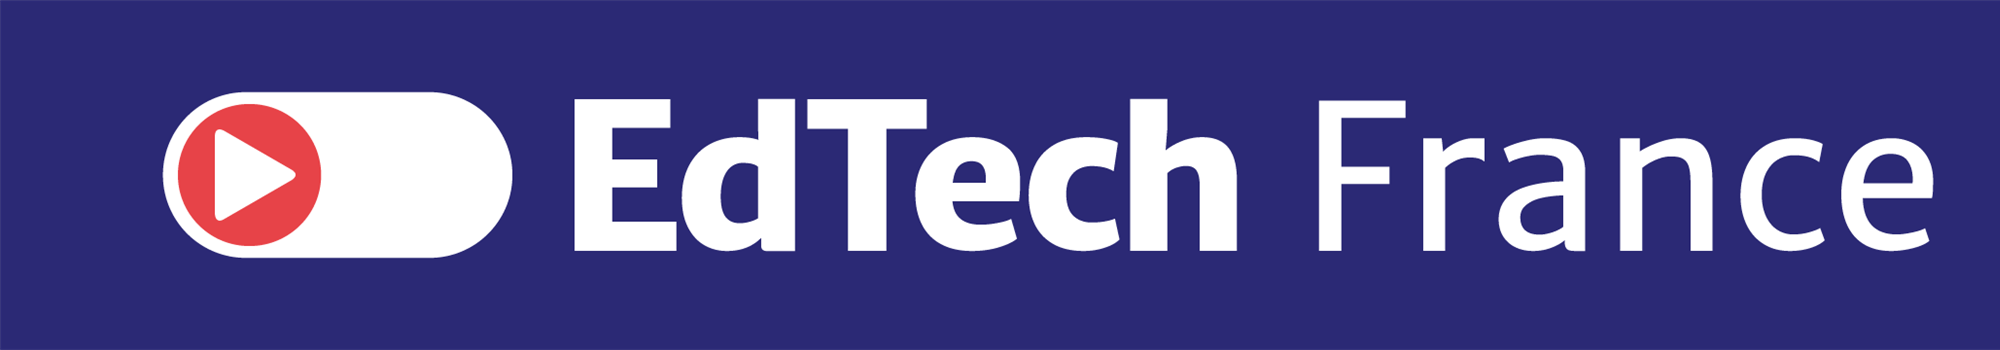 Ed tech france logo